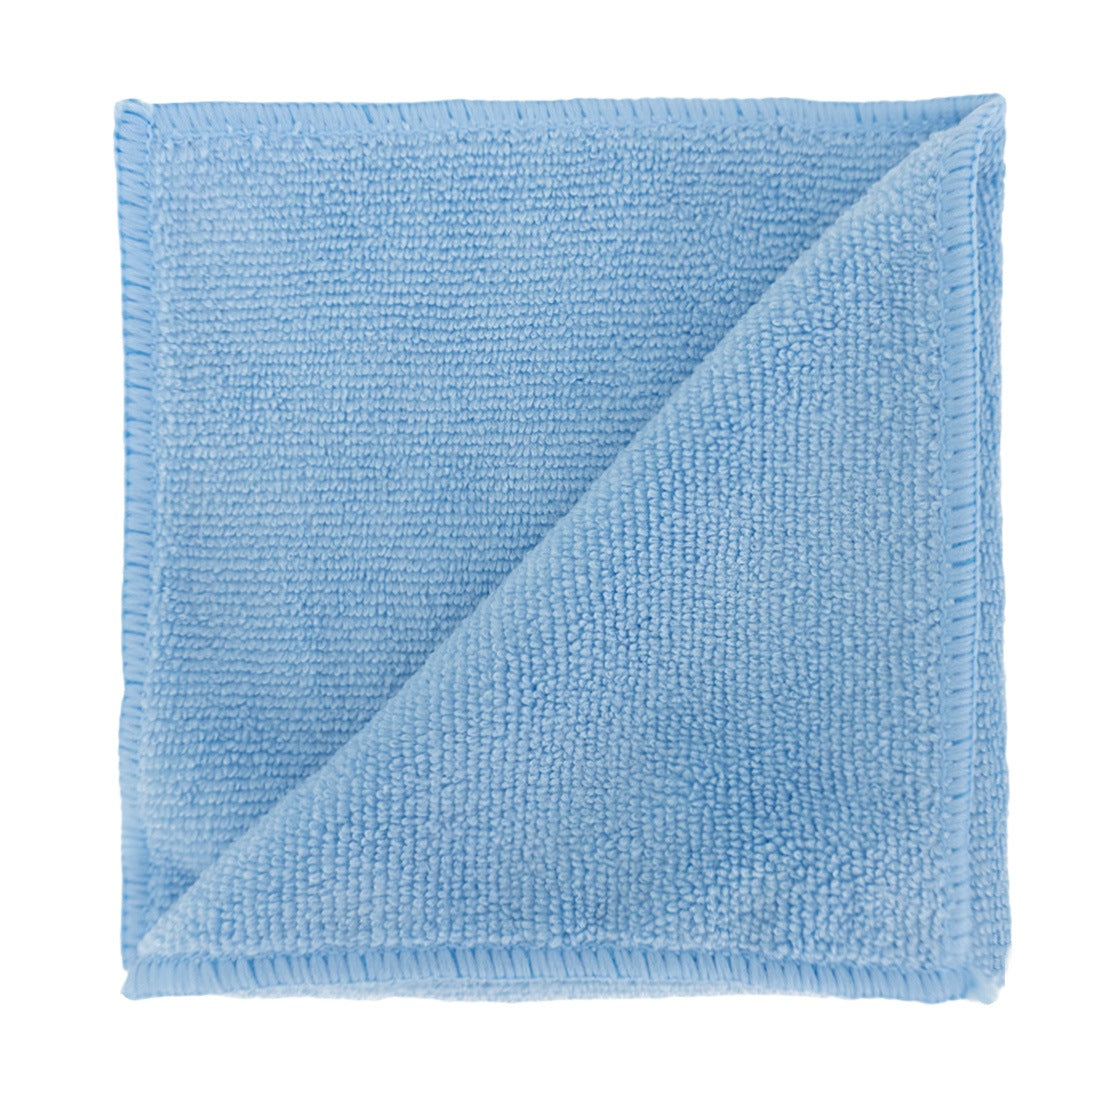 XERO Microfiber Towel Blue Front View